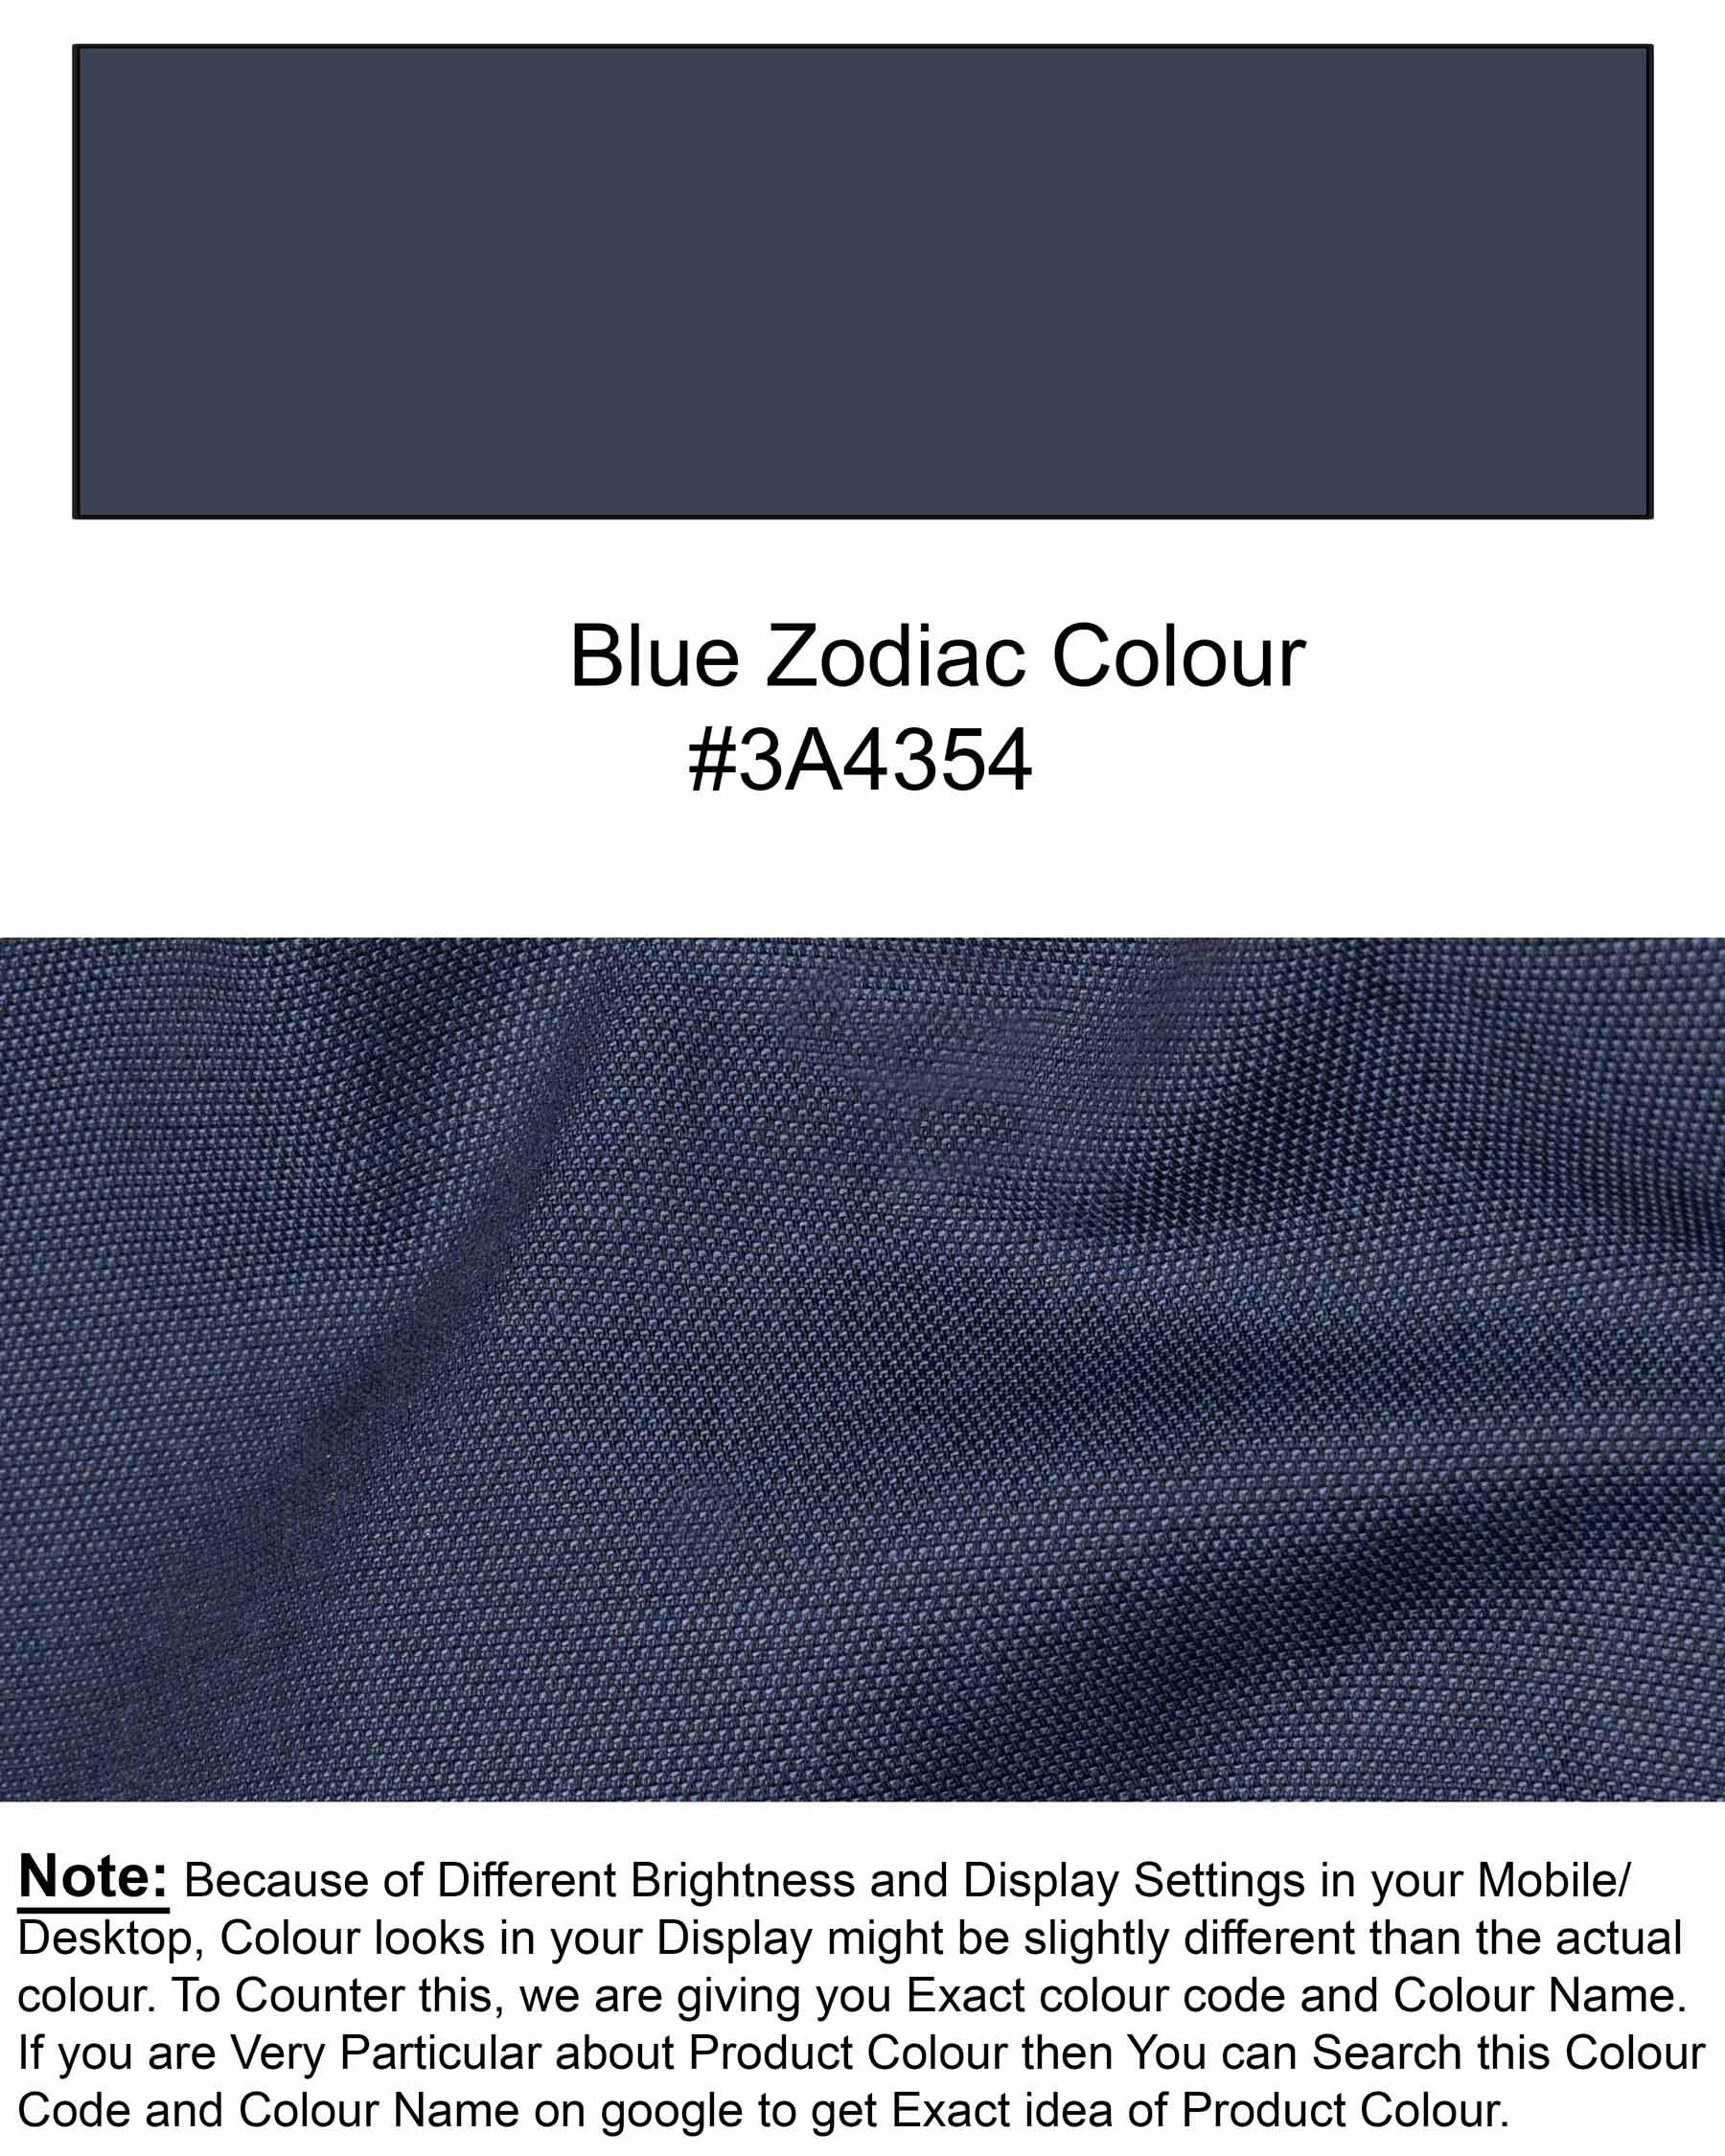 Blue Zodiac Heavyweight Royal Oxford OverShirt 6134-BD-OS-38, 6134-BD-OS-H-38, 6134-BD-OS-39, 6134-BD-OS-H-39, 6134-BD-OS-40, 6134-BD-OS-H-40, 6134-BD-OS-42, 6134-BD-OS-H-42, 6134-BD-OS-44, 6134-BD-OS-H-44, 6134-BD-OS-46, 6134-BD-OS-H-46, 6134-BD-OS-48, 6134-BD-OS-H-48, 6134-BD-OS-50, 6134-BD-OS-H-50, 6134-BD-OS-52, 6134-BD-OS-H-52